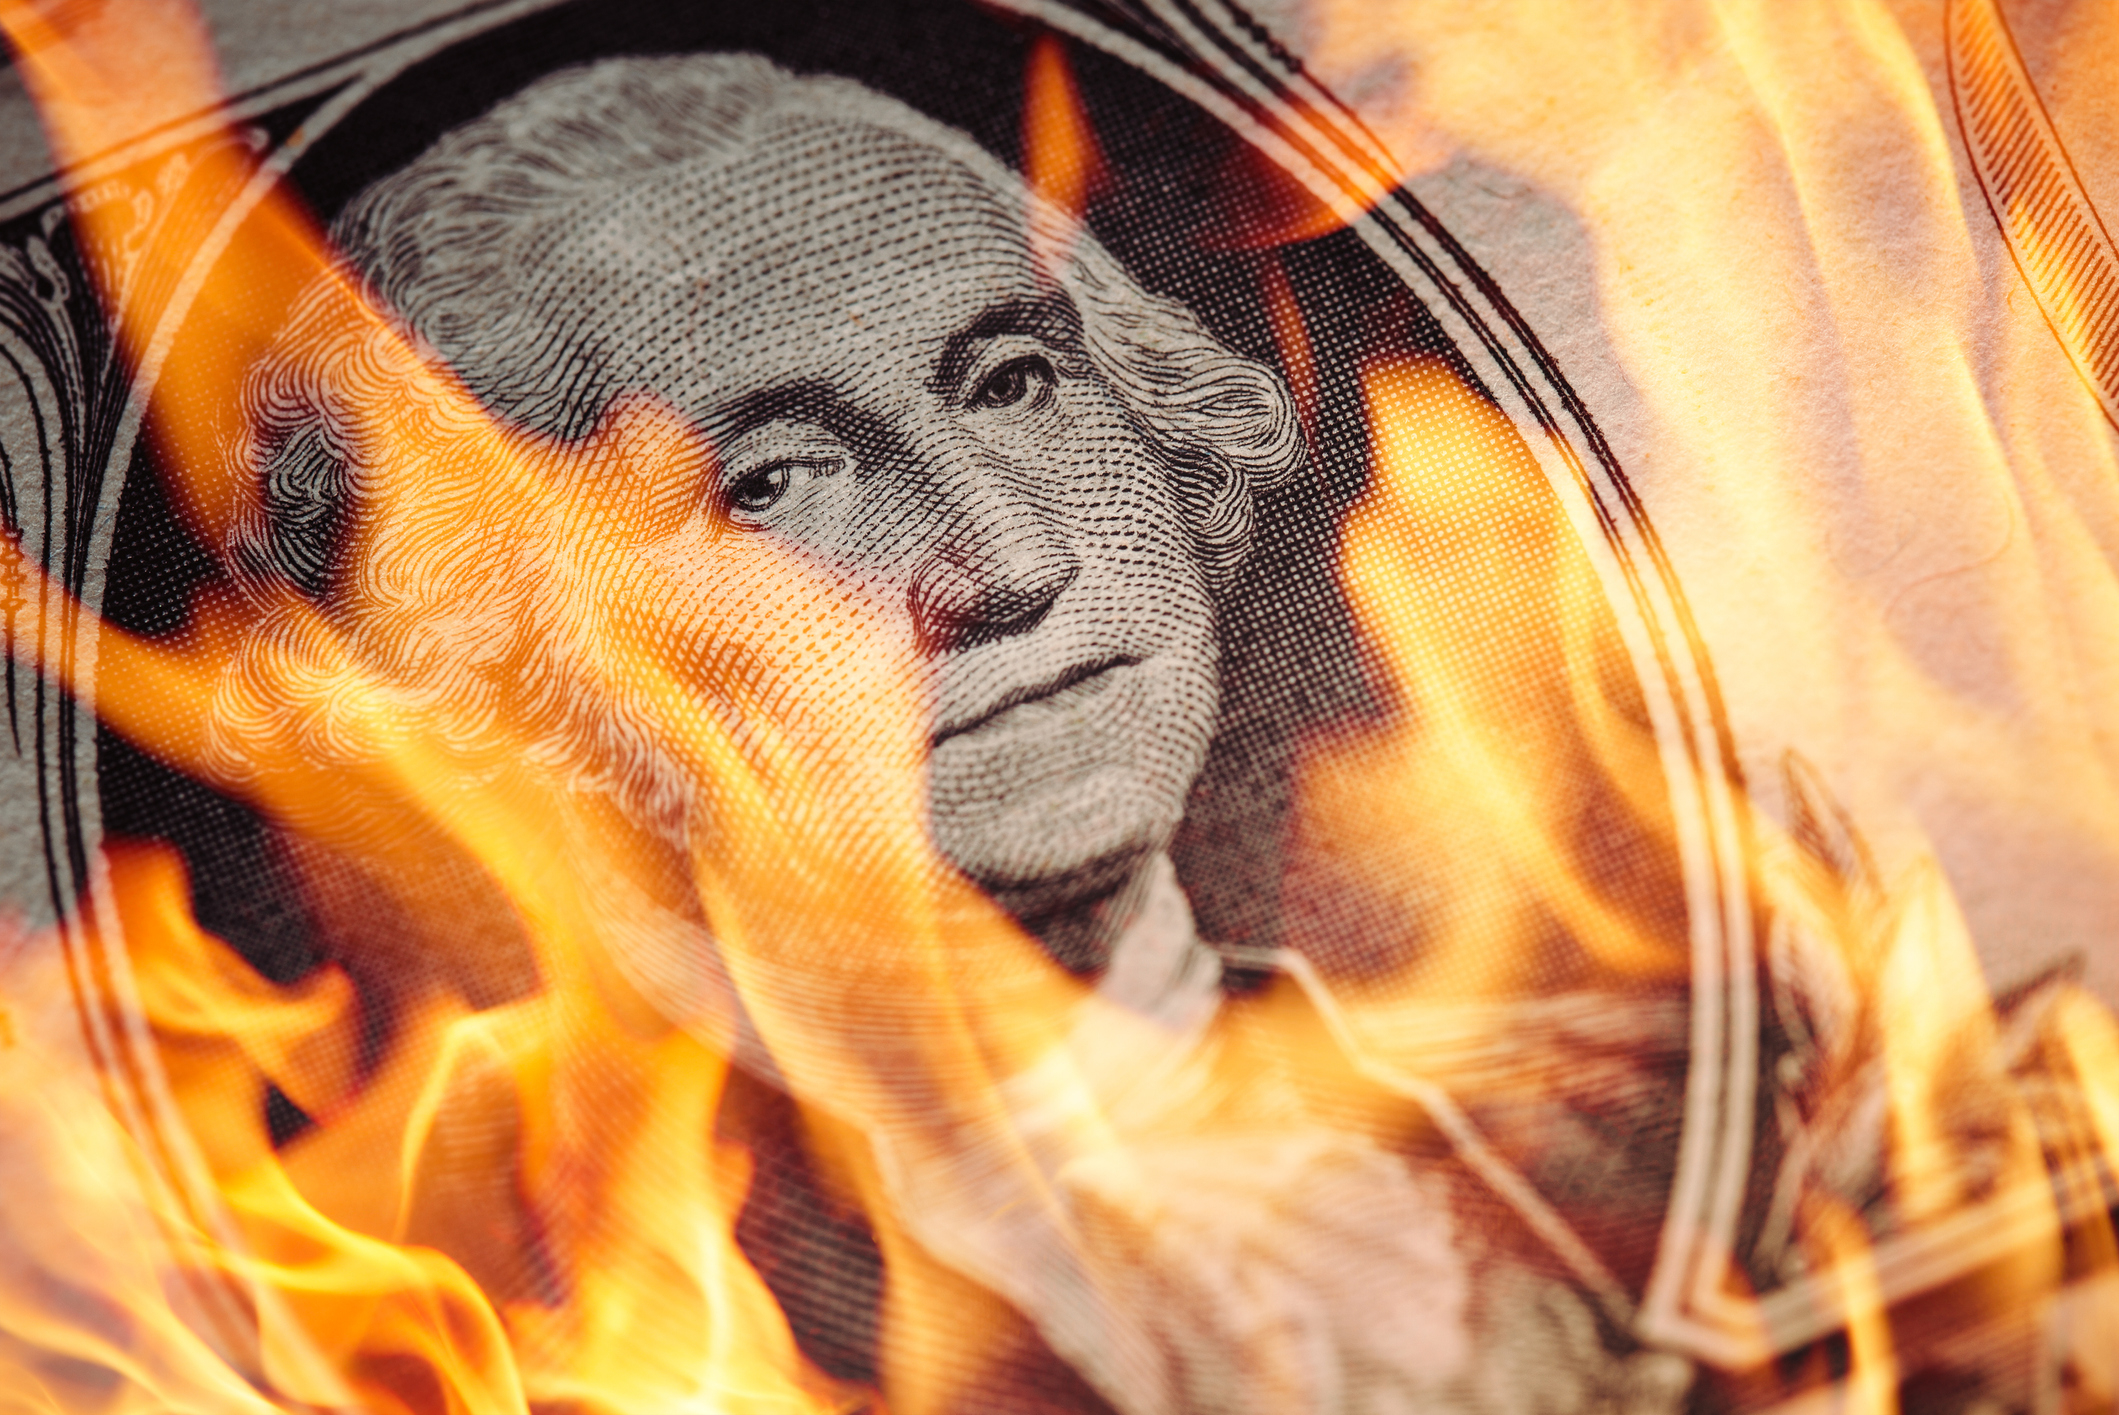 A dollar bill on fire